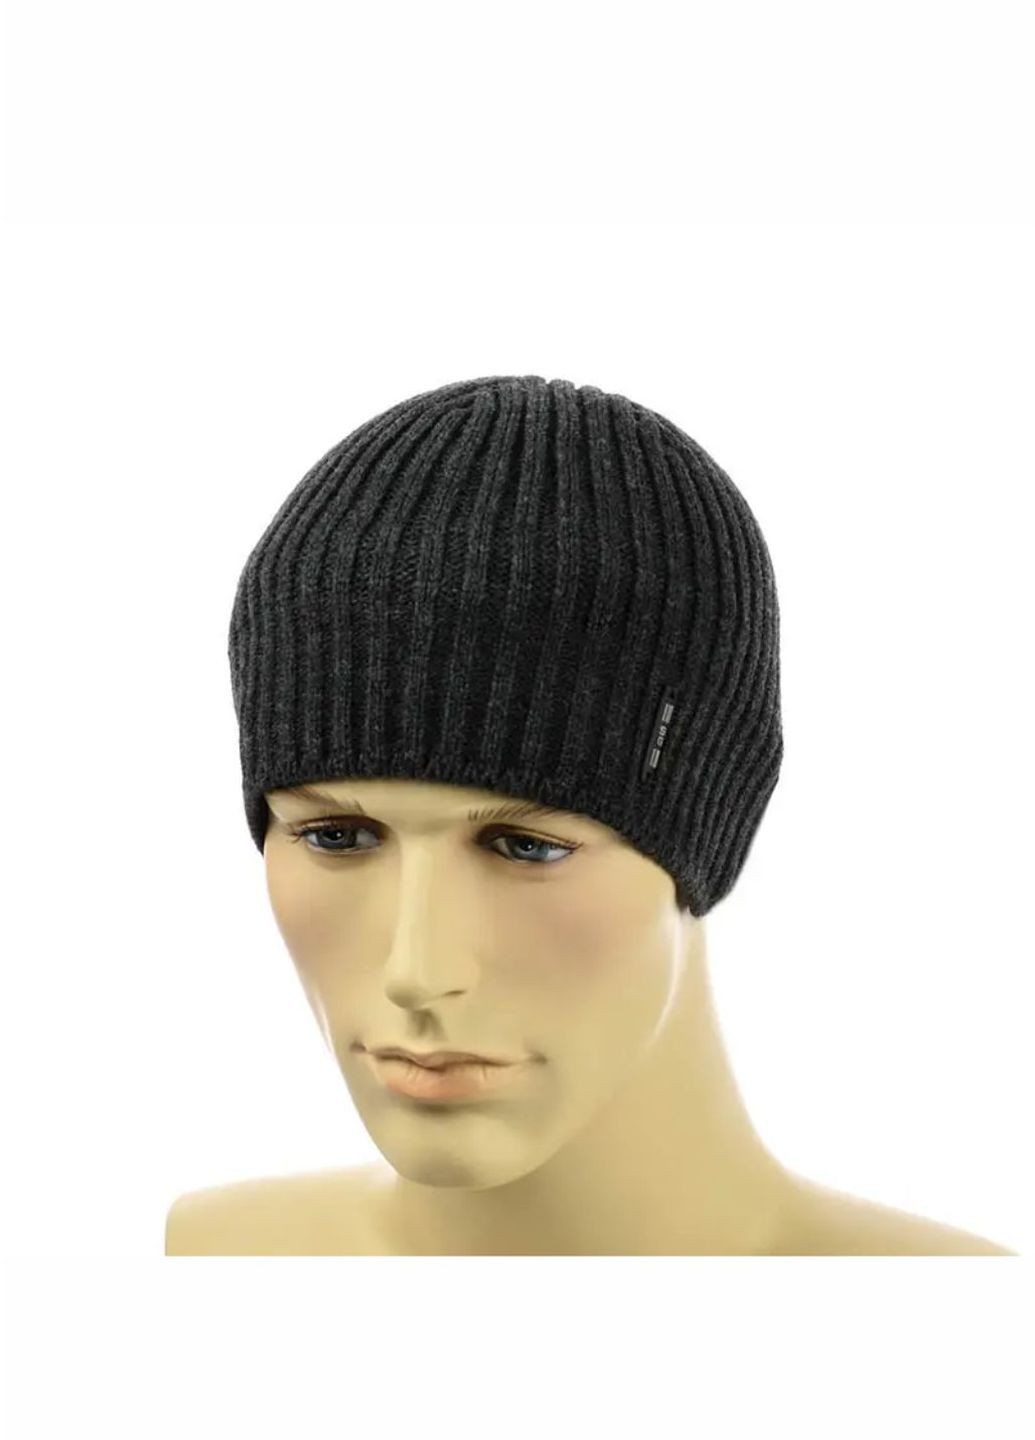 Мужская зимняя шапка на флисе No Brand мужская шапка без отворота (276534533)